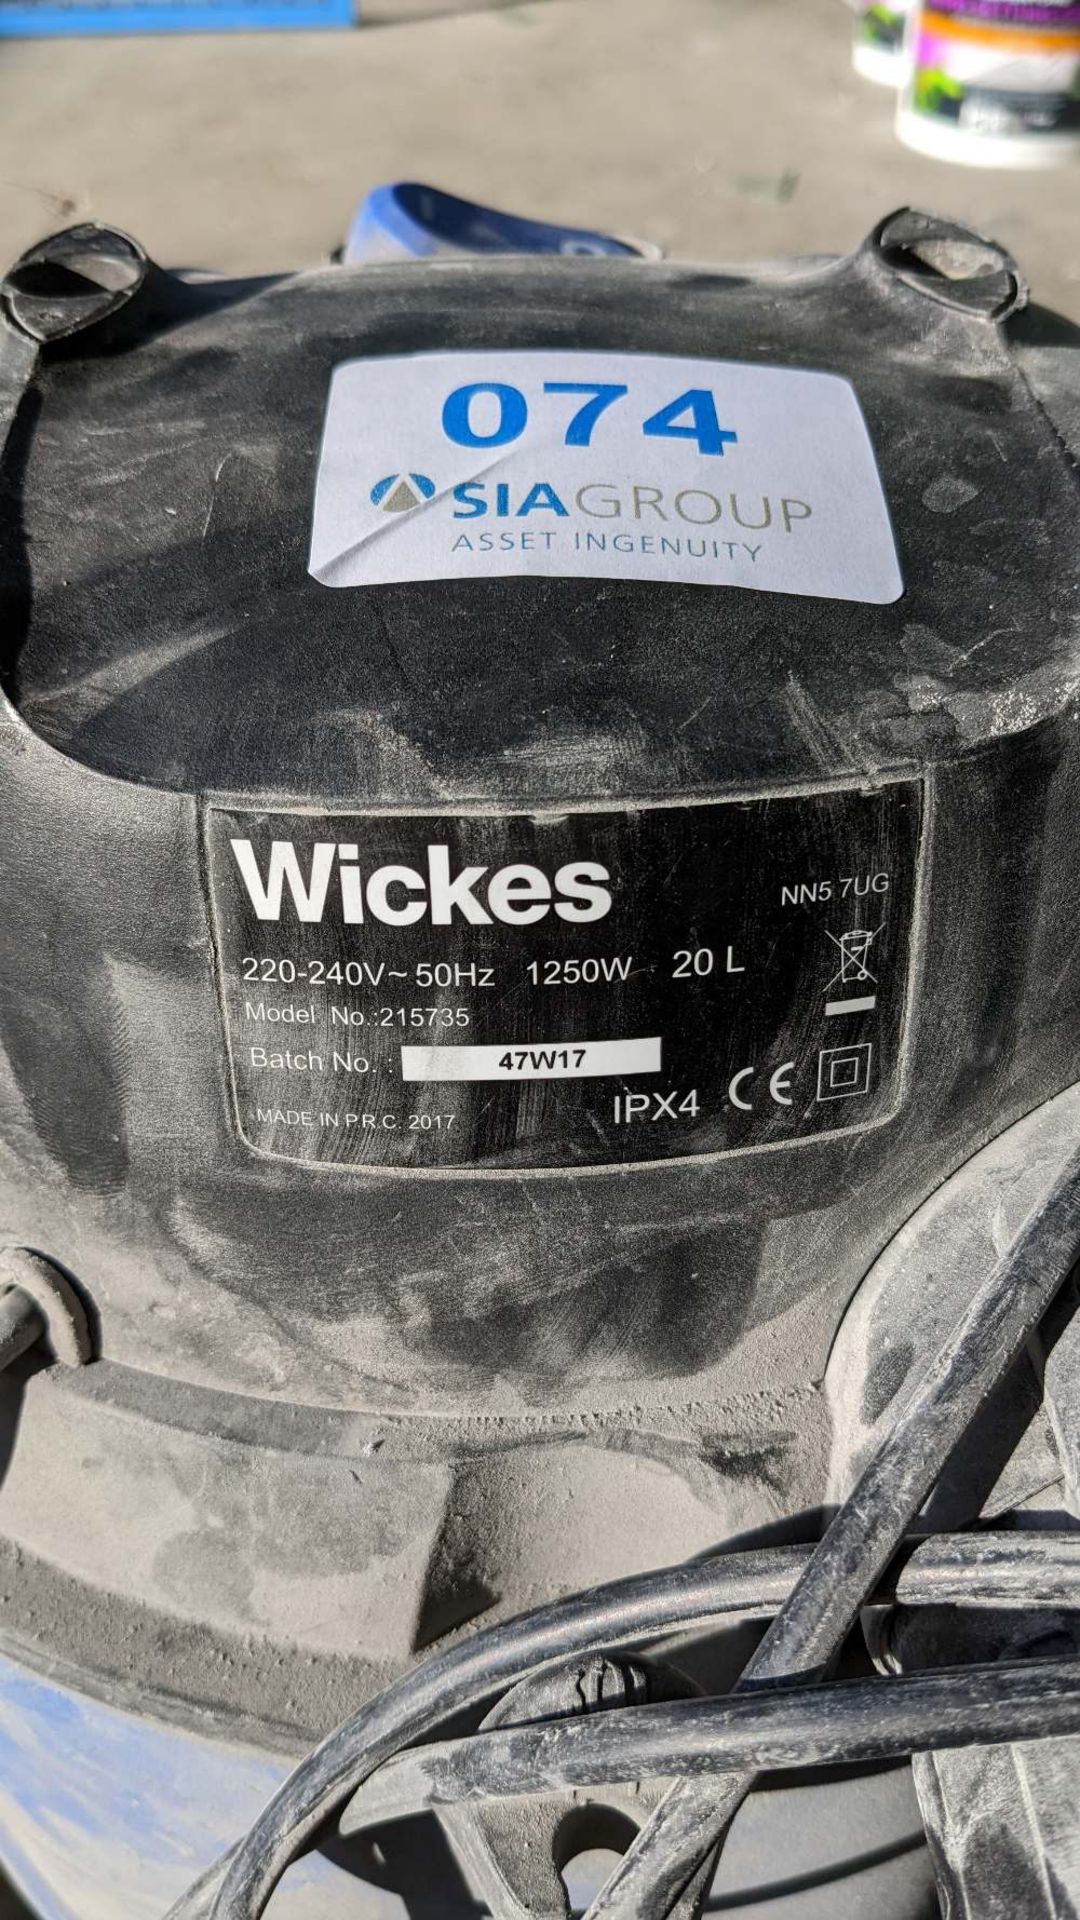 Wickes 1250W Vacuum Cleaner - Image 2 of 3